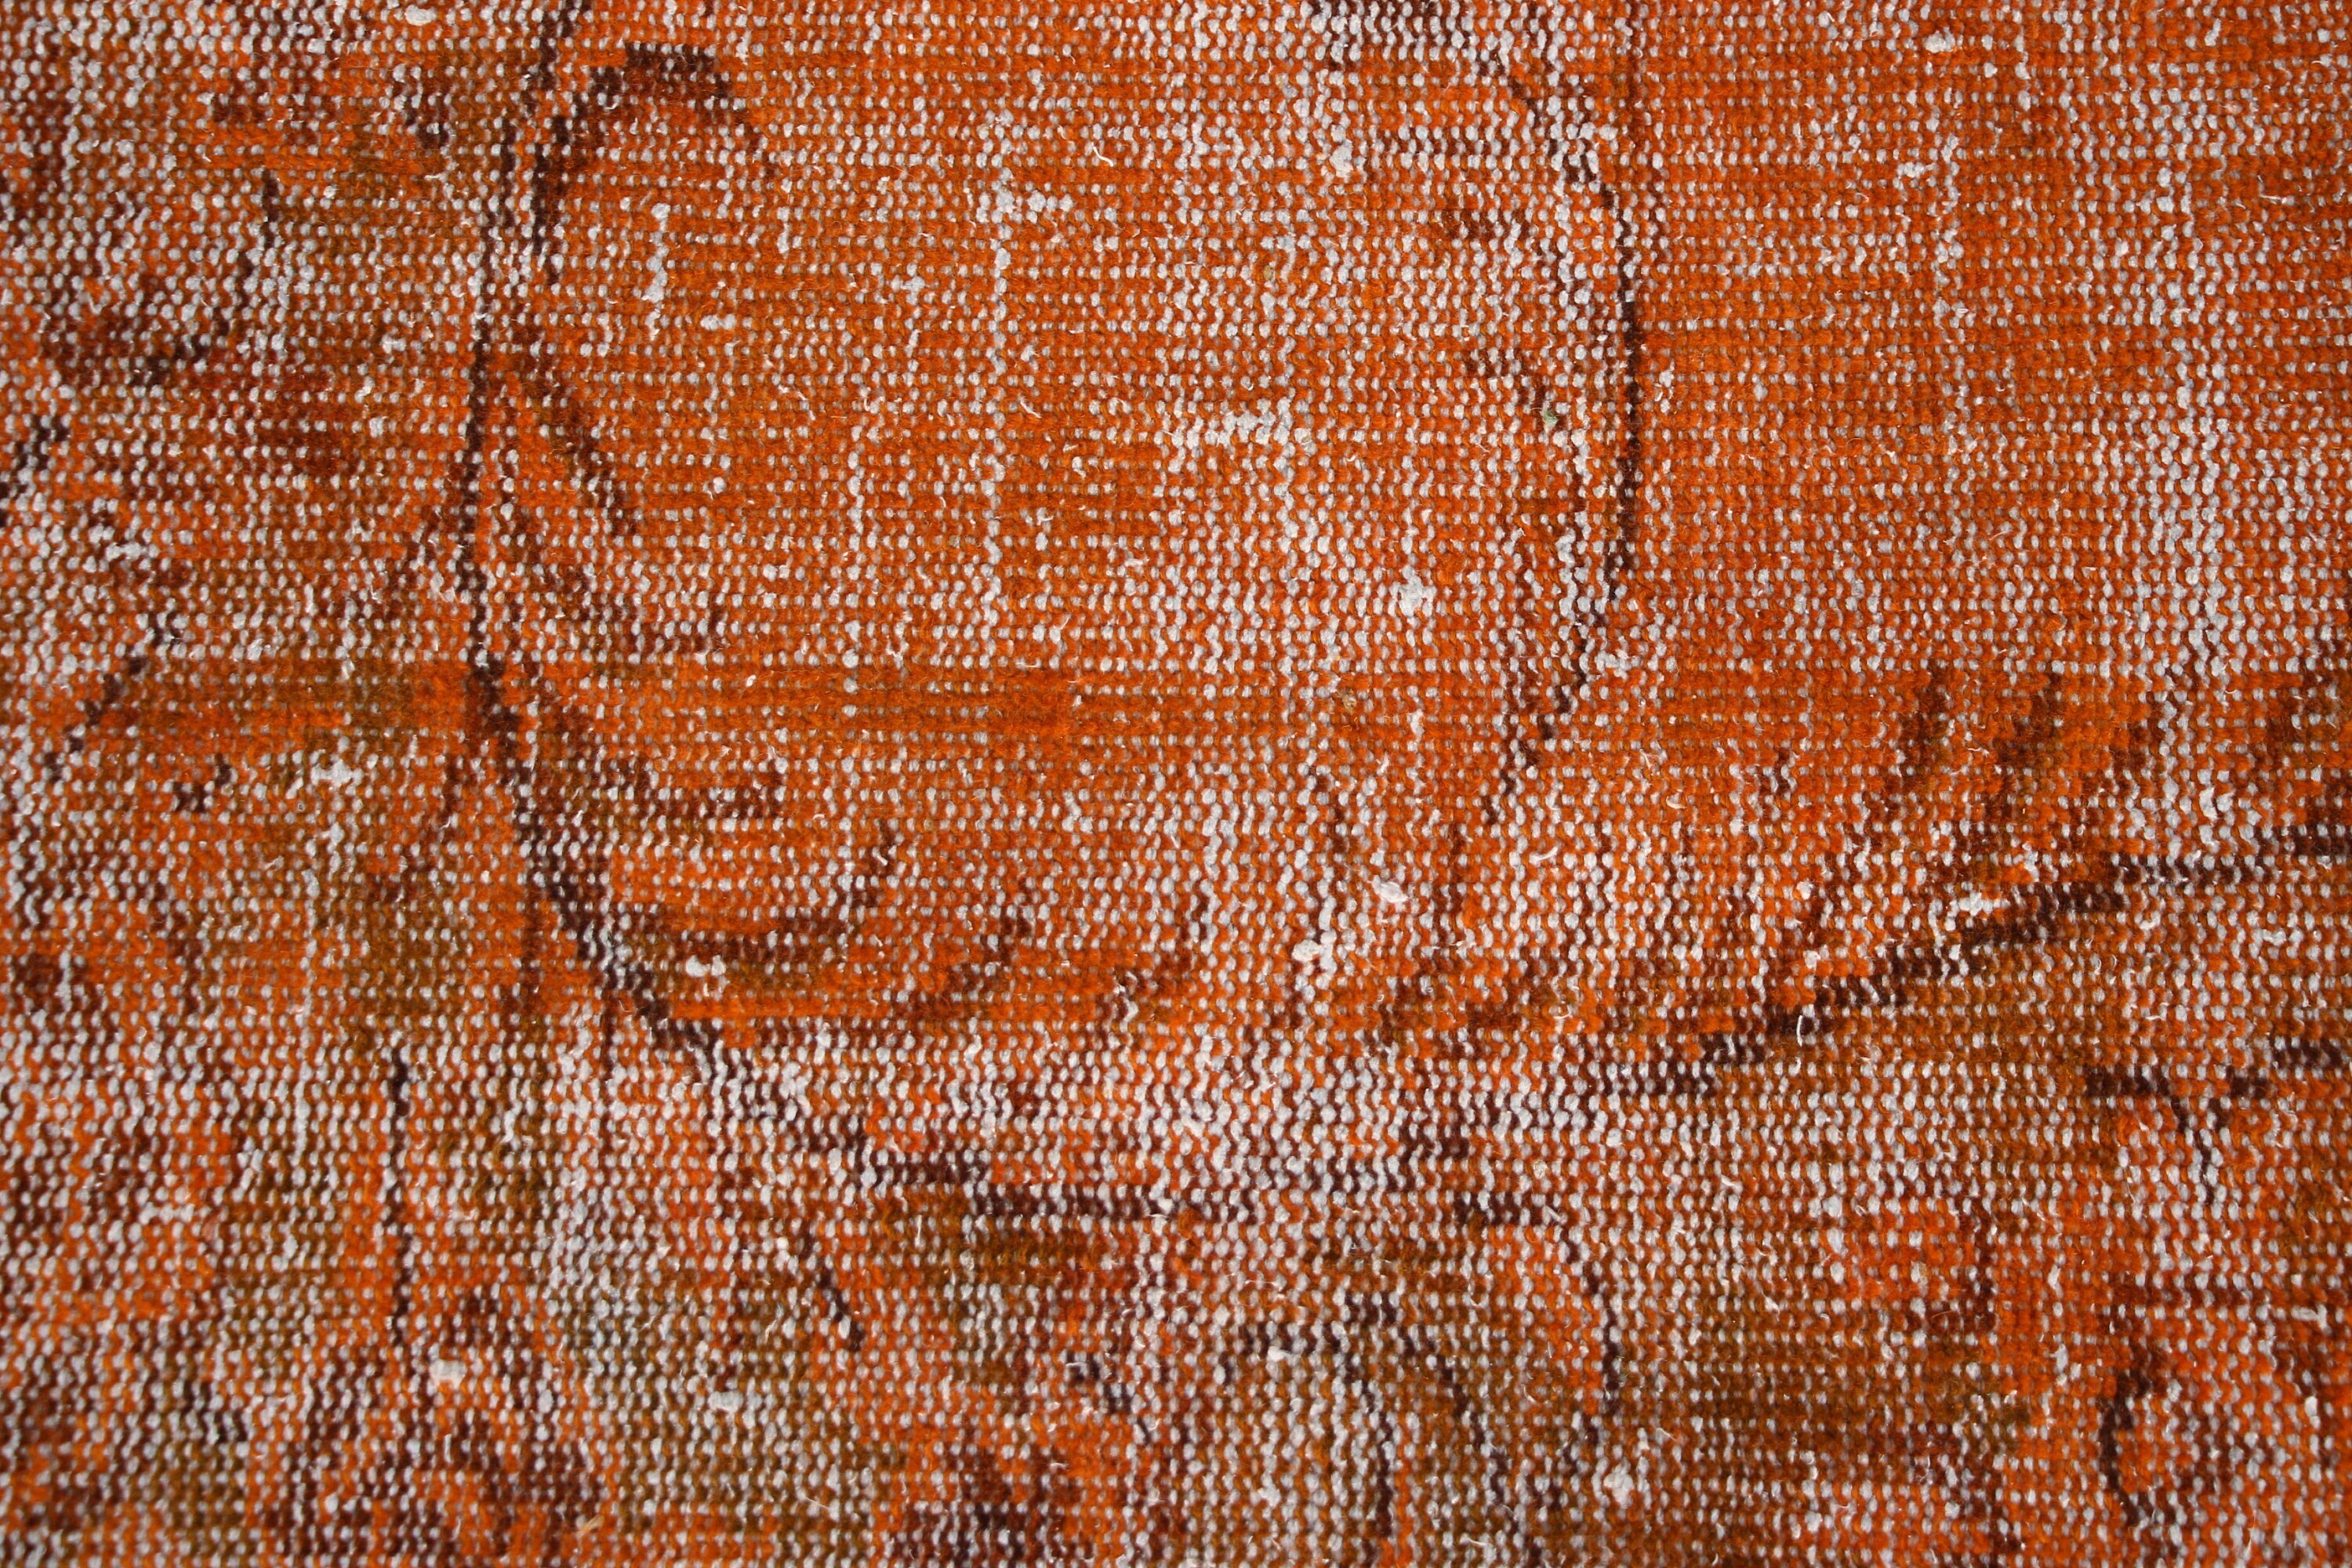 Anatolian Rugs, Orange Wool Rug, Door Mat Rugs, Turkish Rugs, Rugs for Bathroom, Bath Rugs, Vintage Rug, 1.7x3.3 ft Small Rug, Kitchen Rug